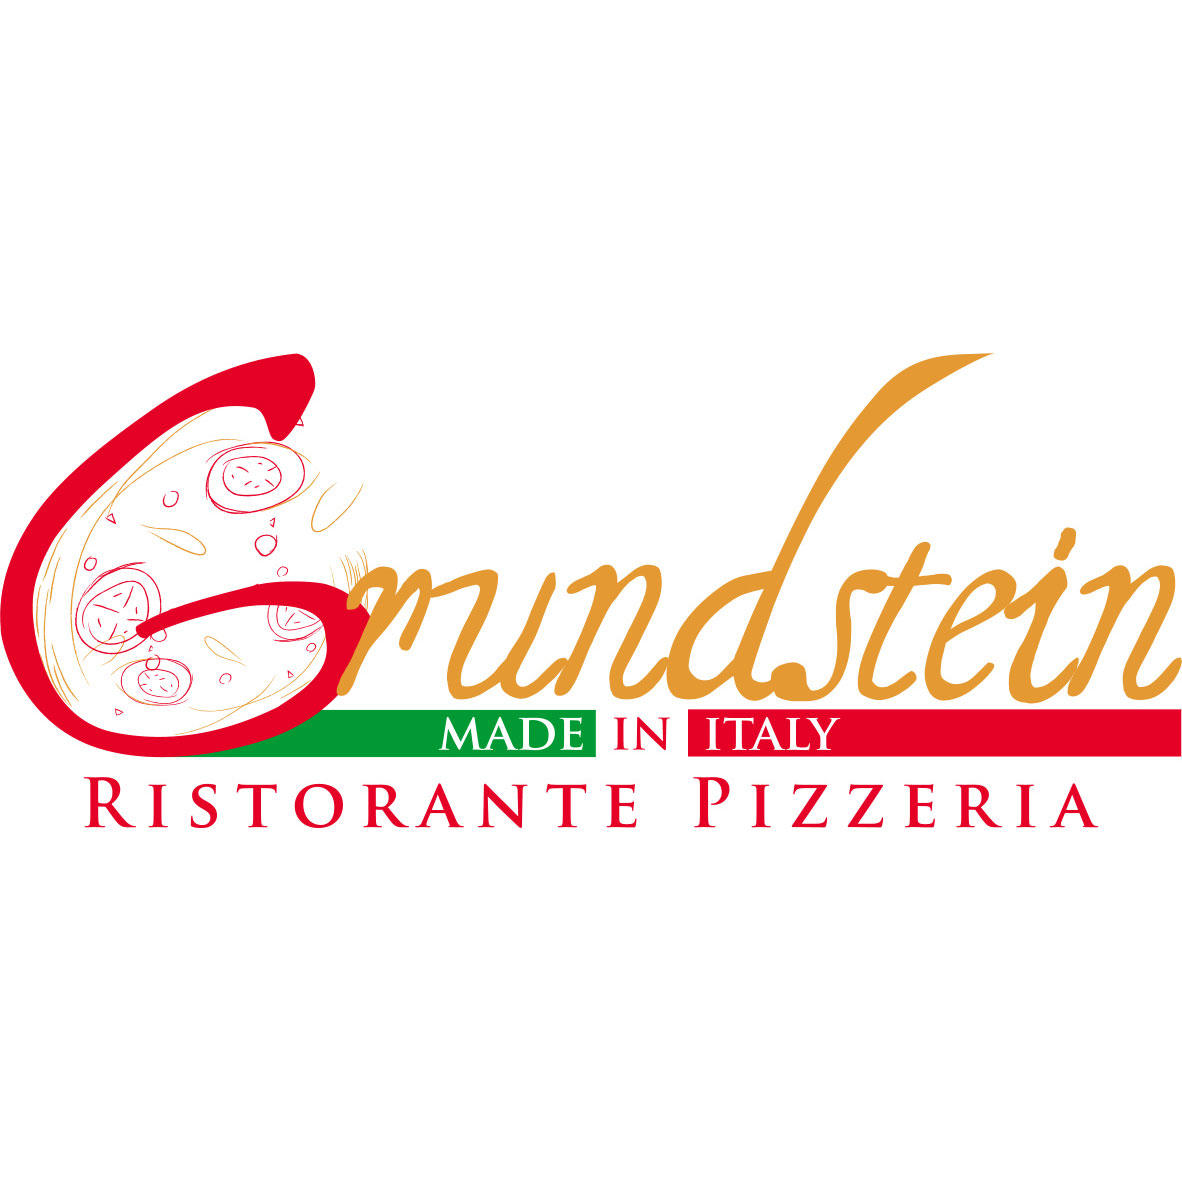 Ristorante Pizzeria Grundstein Made in Italy Logo